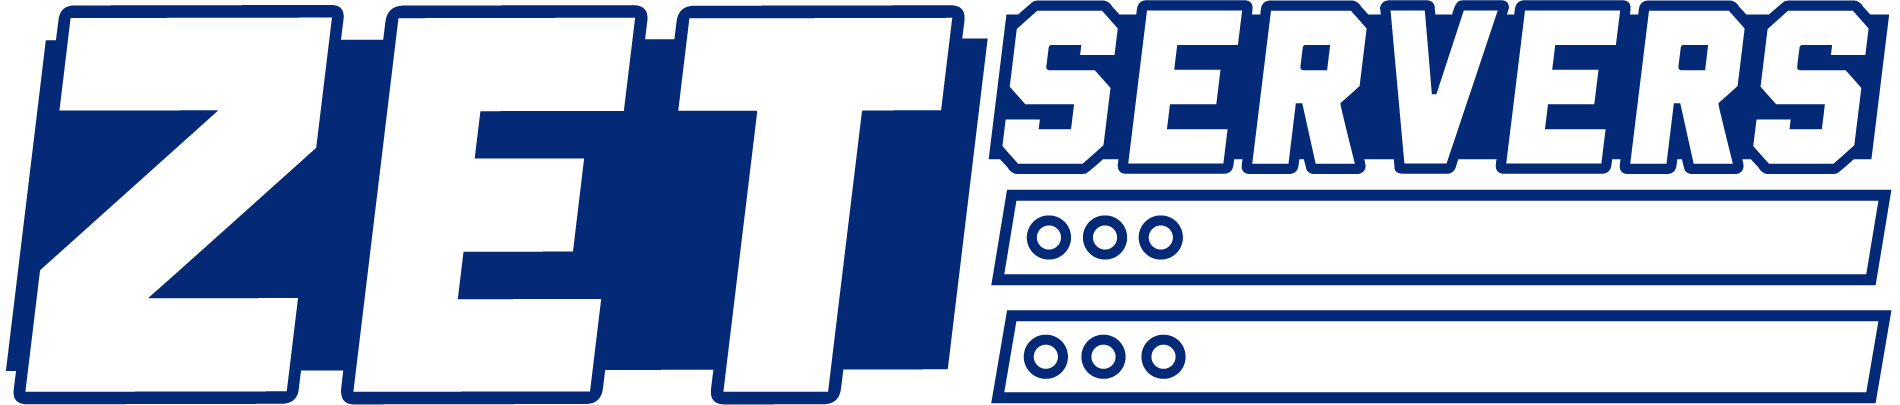 ZetServers Logo